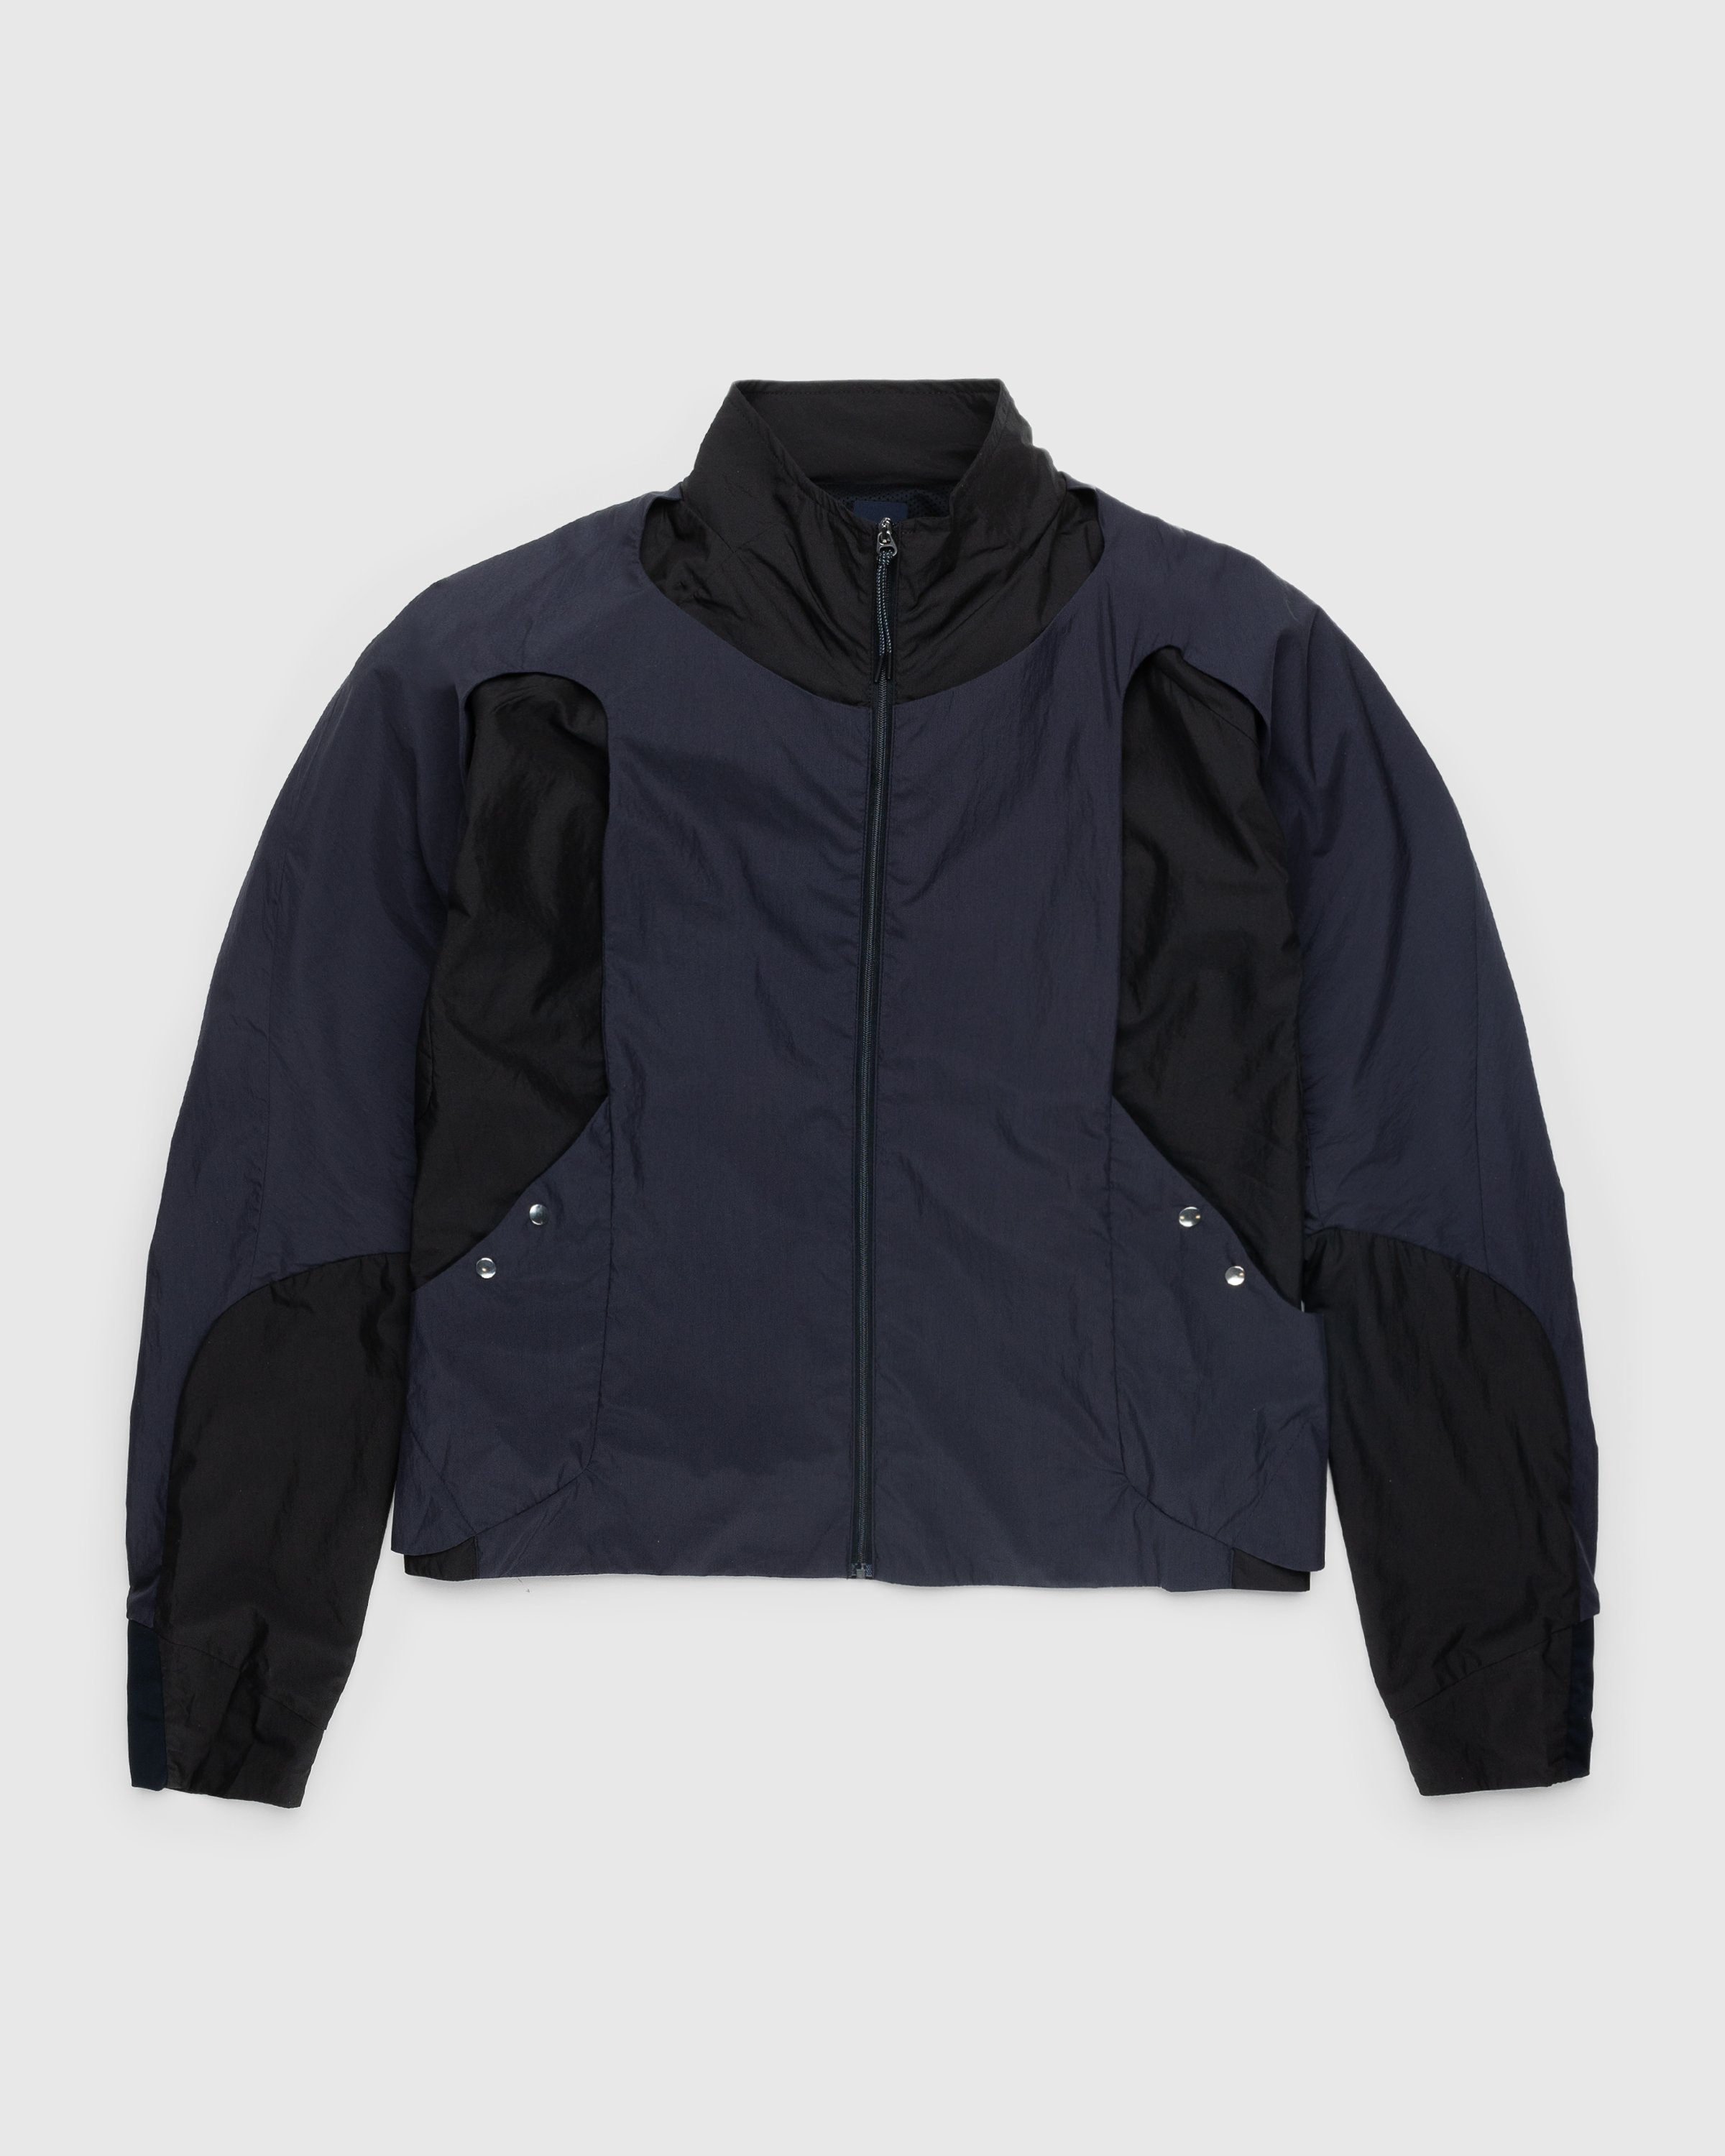 _J.L-A.L_ - Manifold Jacket Blue - Clothing - Black - Image 1